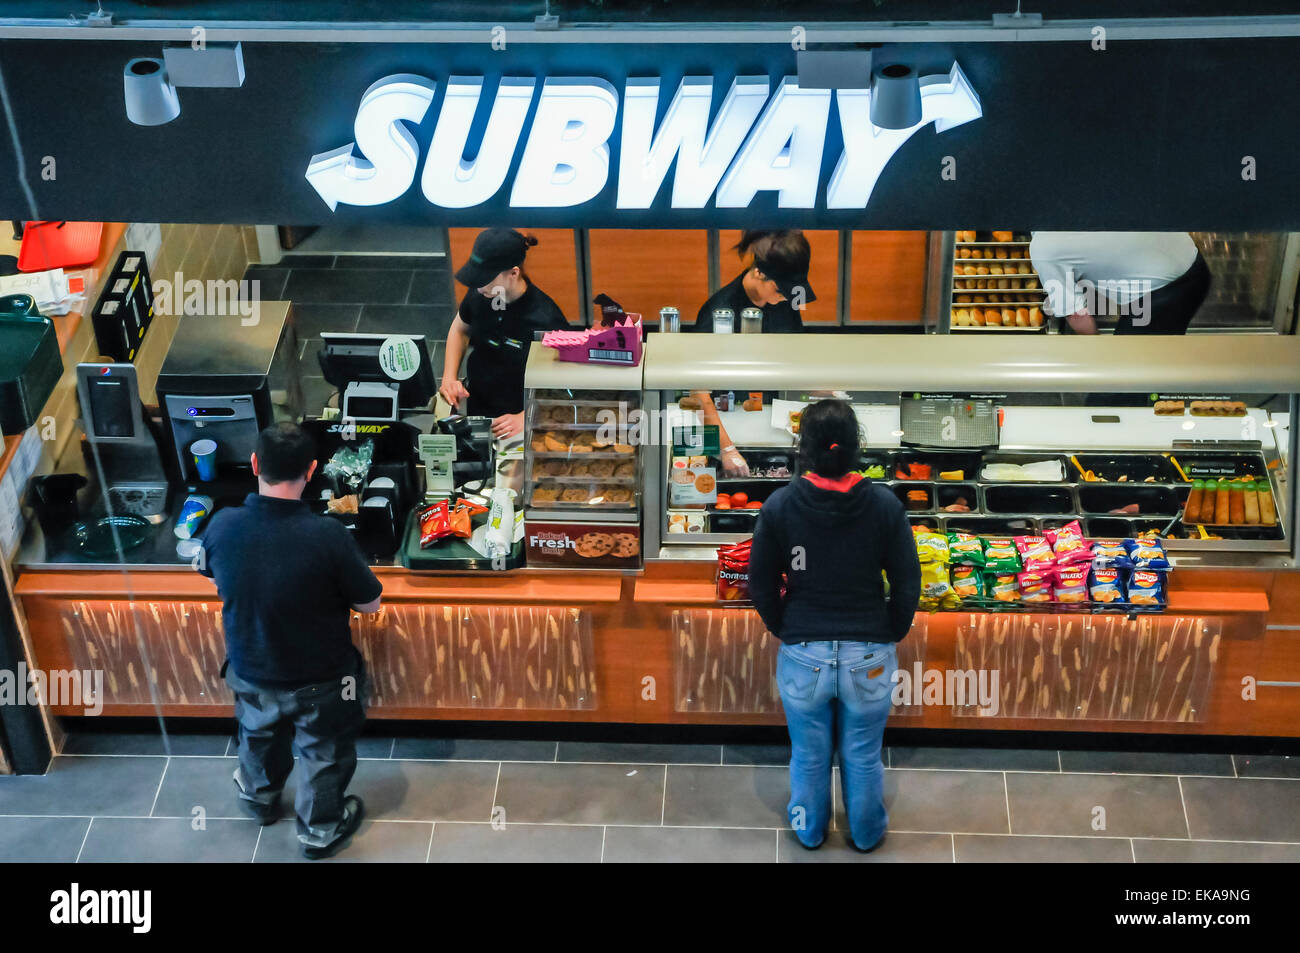 Subway sandwich and salad bar at a motorway service station Stock Photo